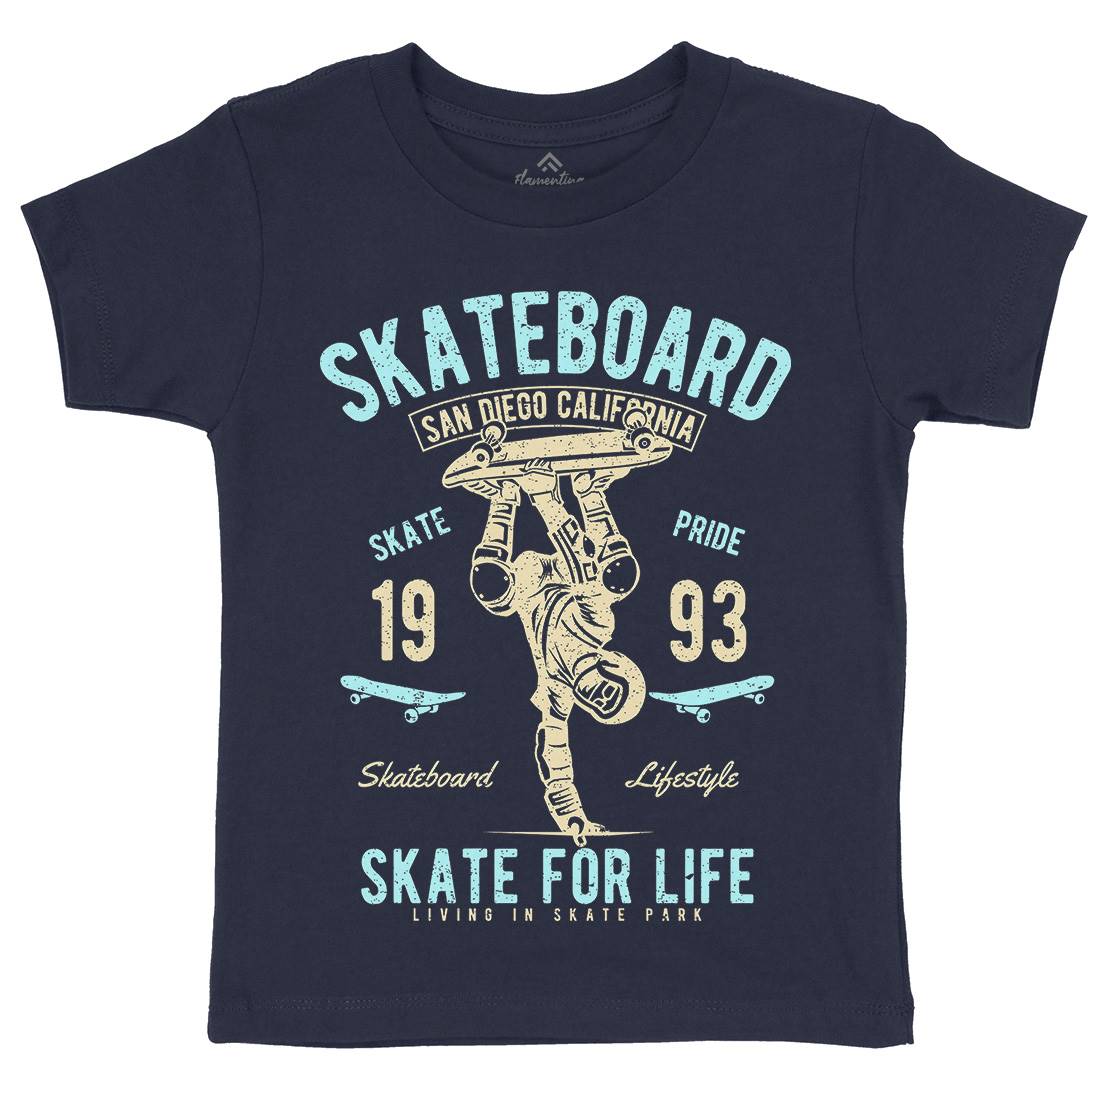 Skate For Life Kids Crew Neck T-Shirt Skate A143